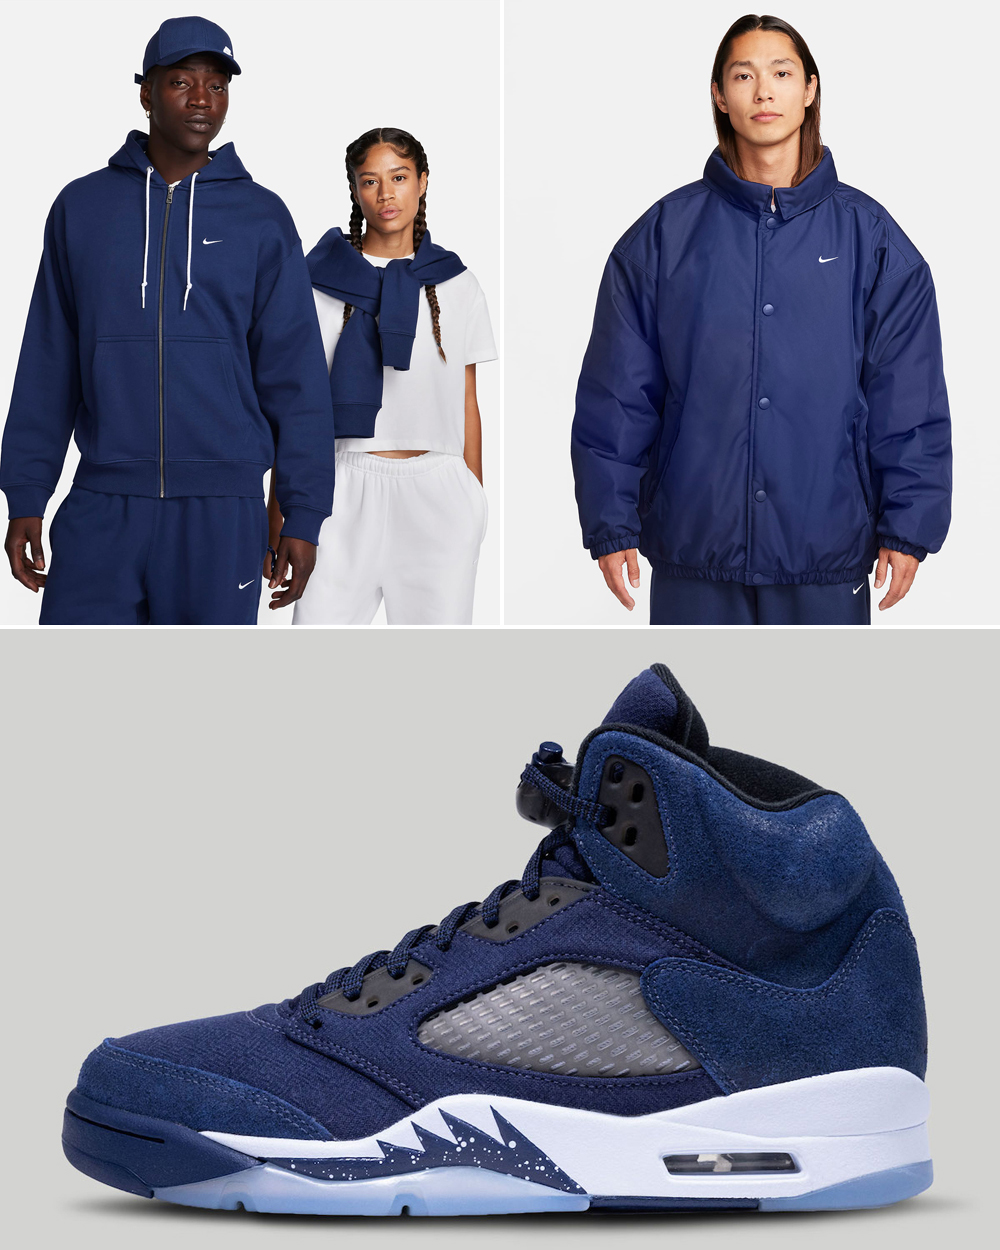 Air-Jordan-5-Midnight-Navy-Outfits-4